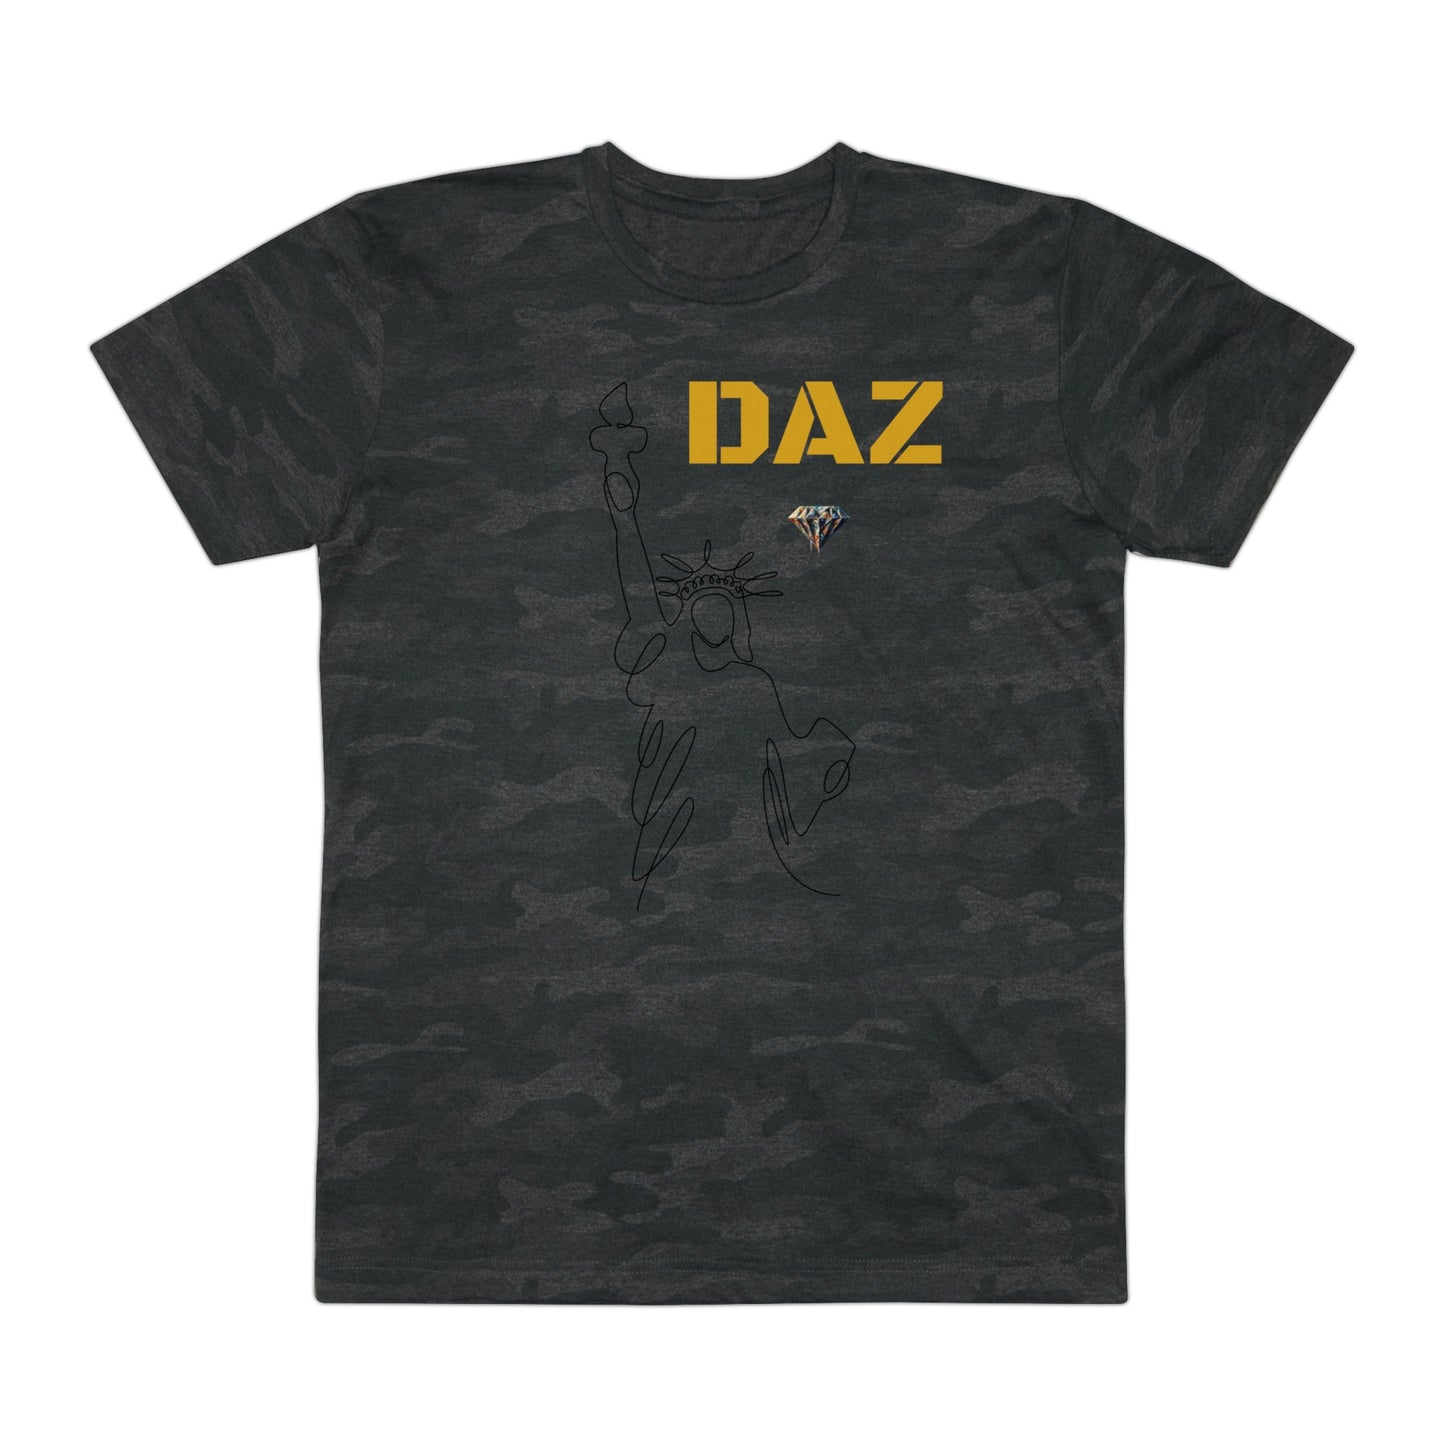 DAZ Men's fine knit t-shirt